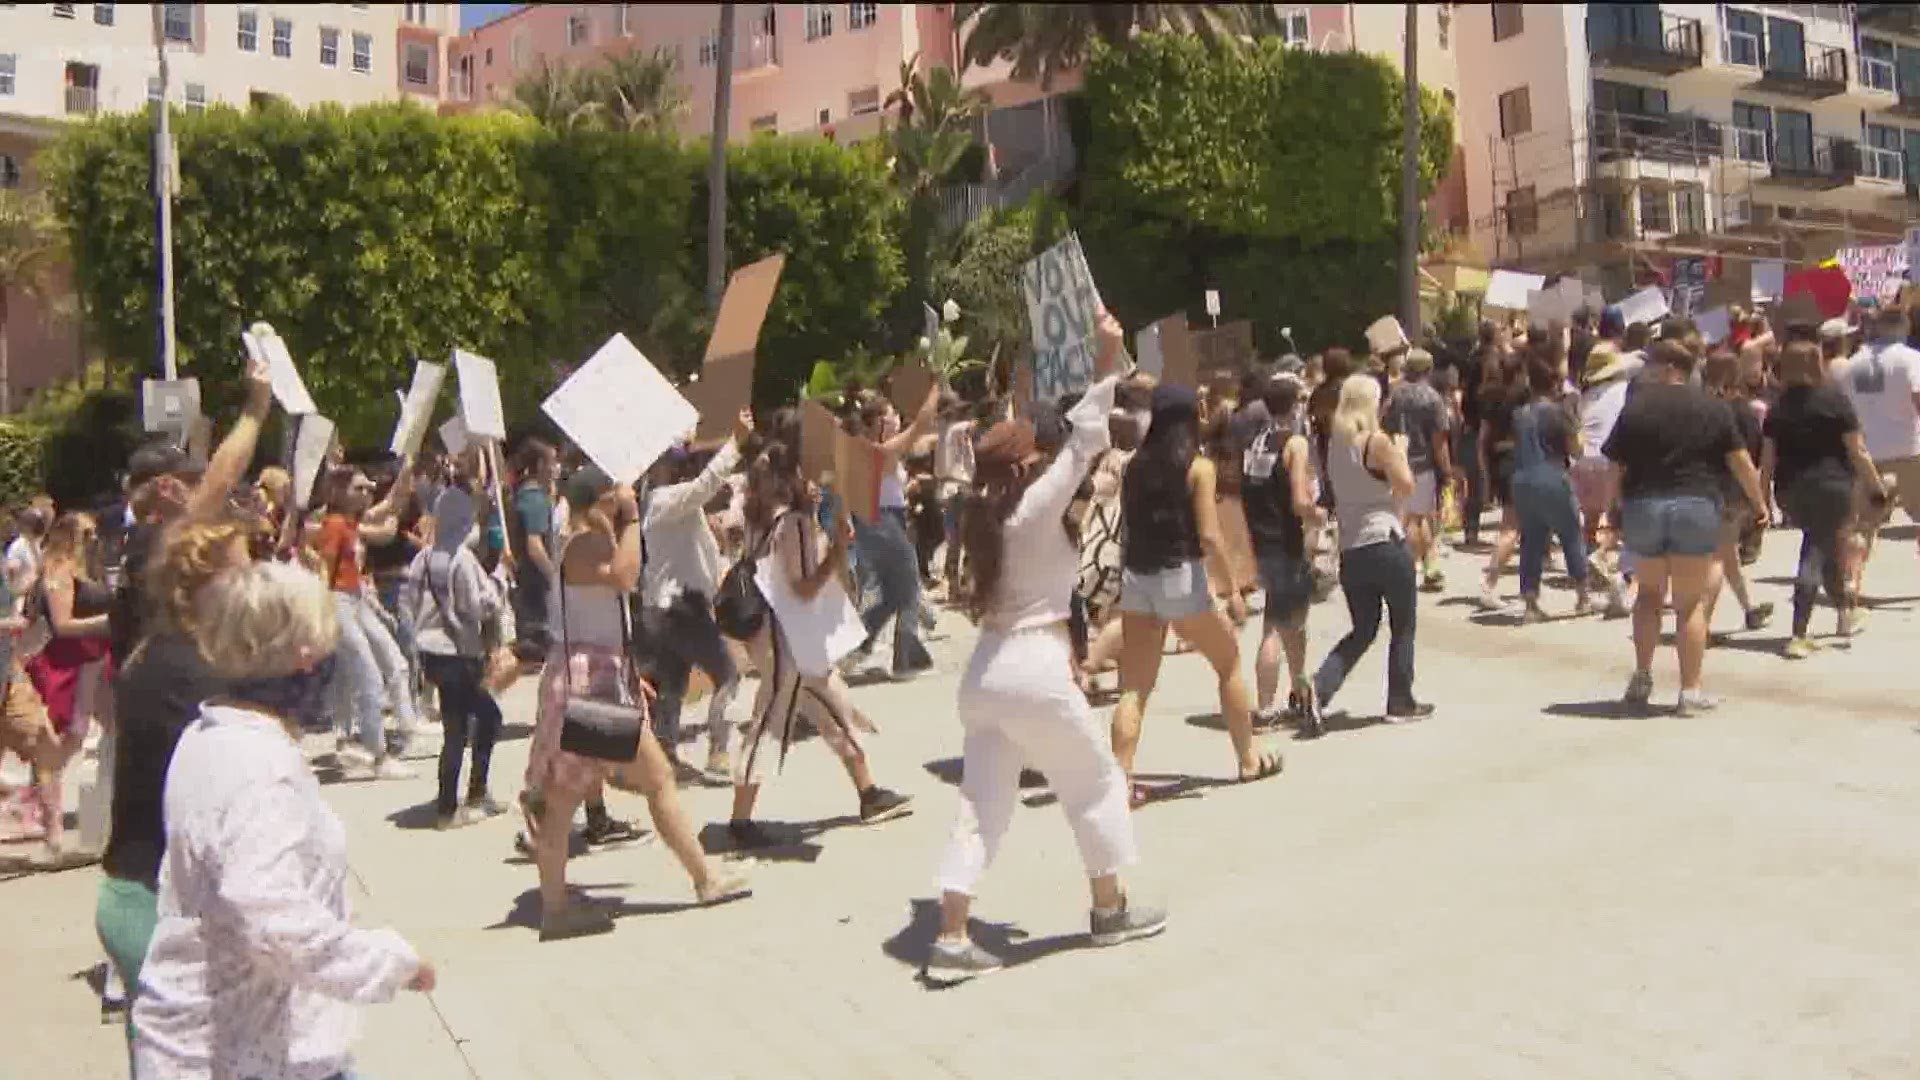 Hundreds of people flocked to La Jolla on Friday.